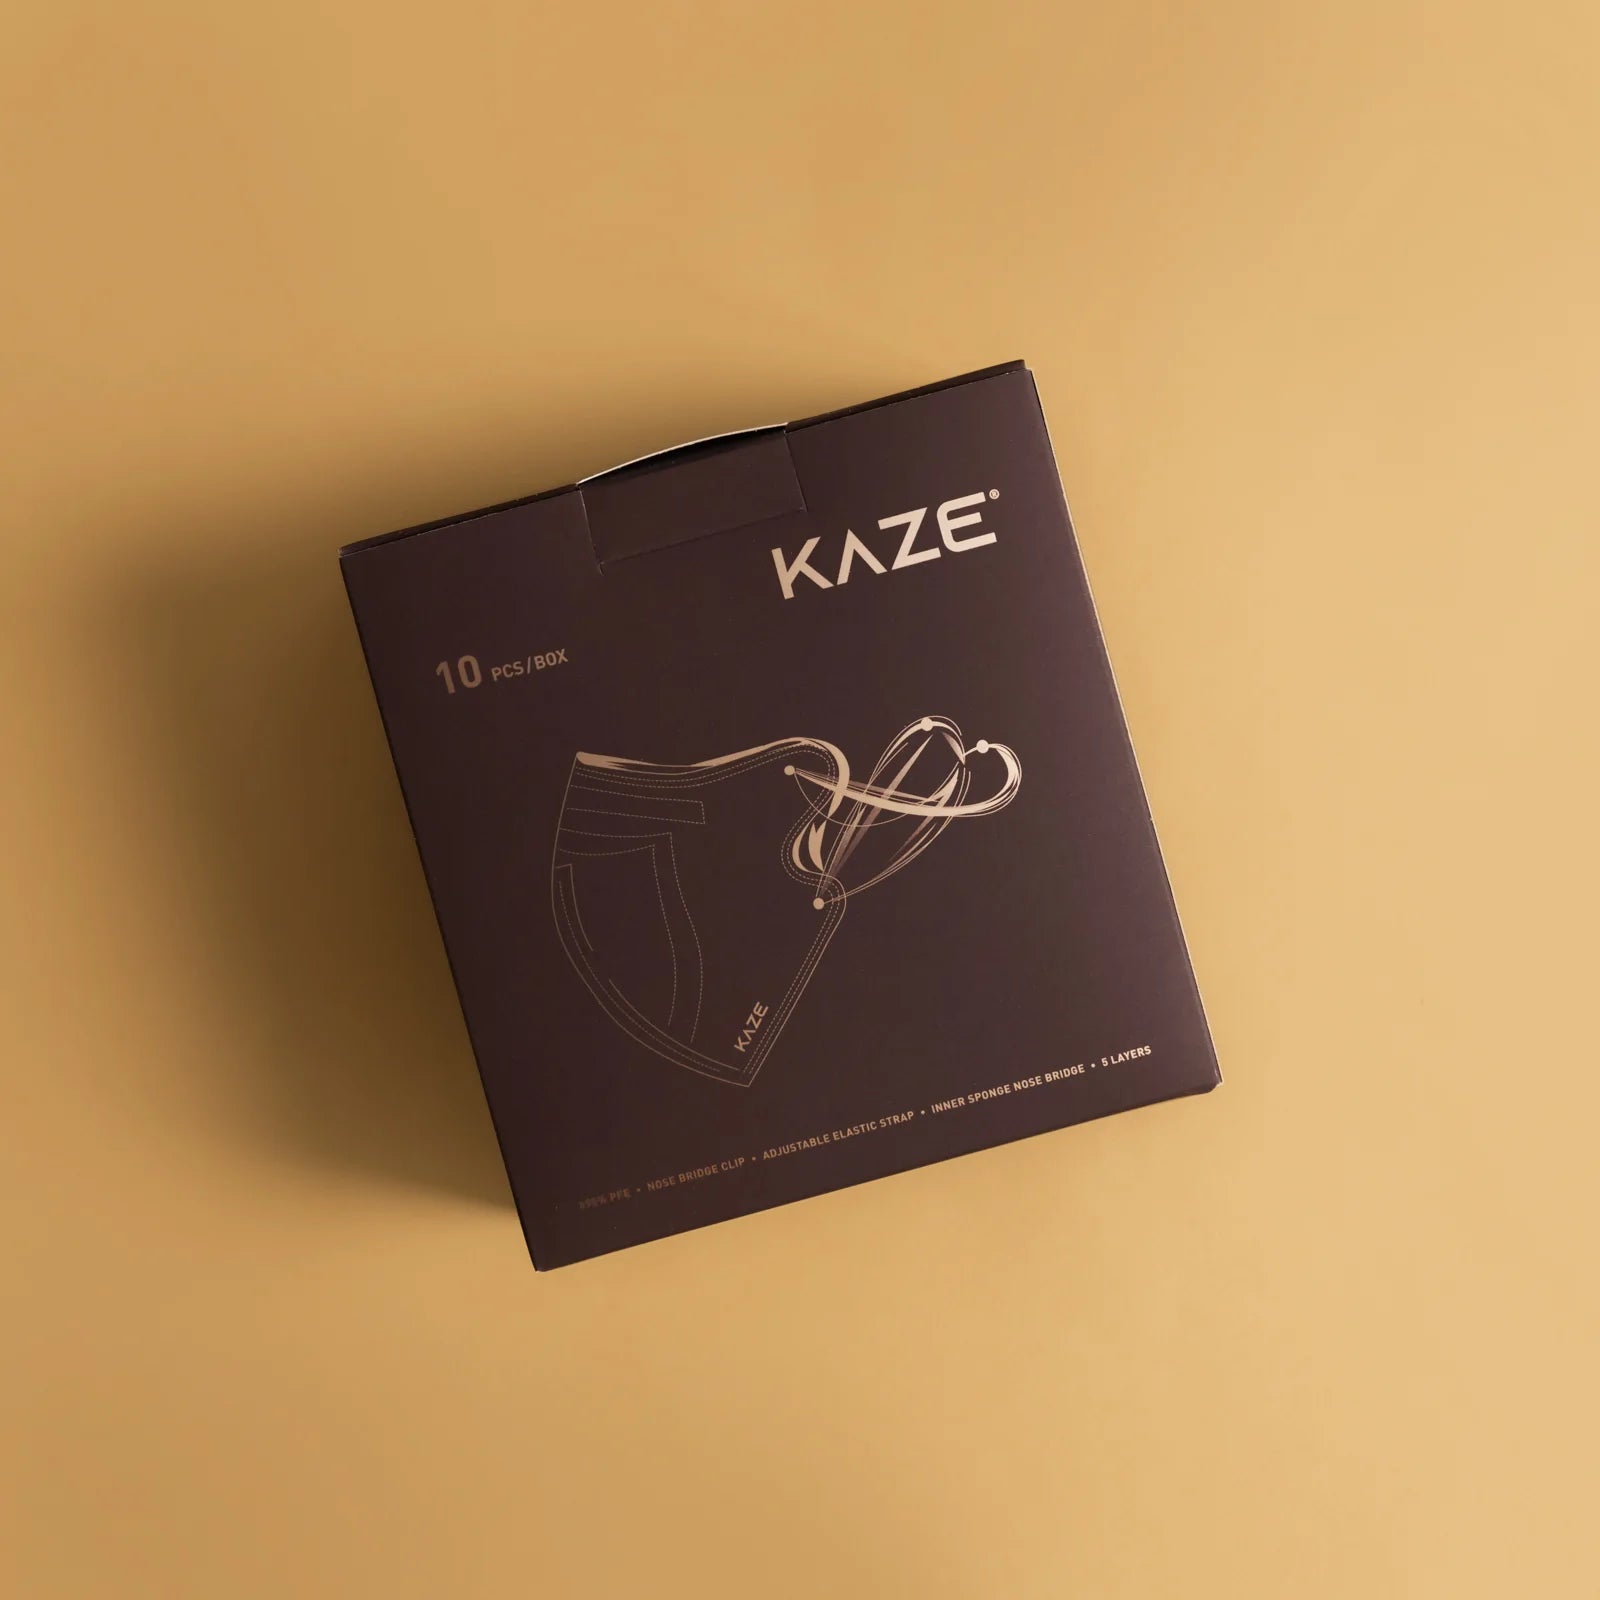 KAZE Masks - Mini Brown Collection